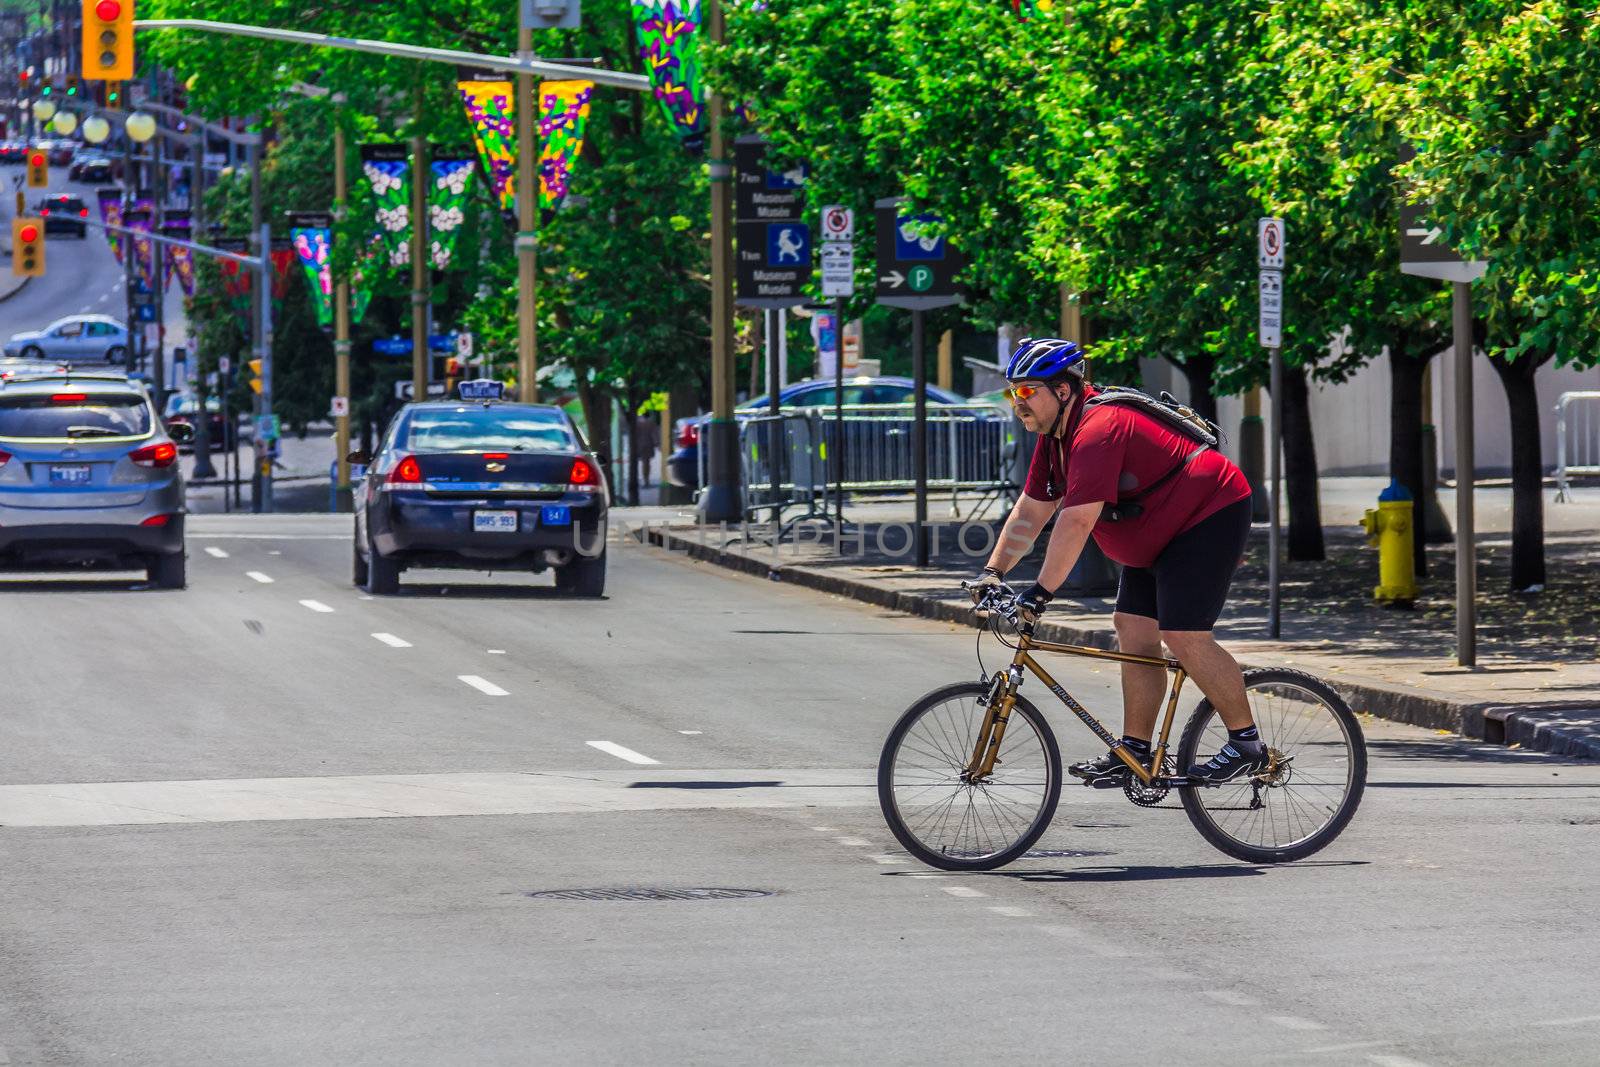 A bicyclist in Ottawa by petkolophoto